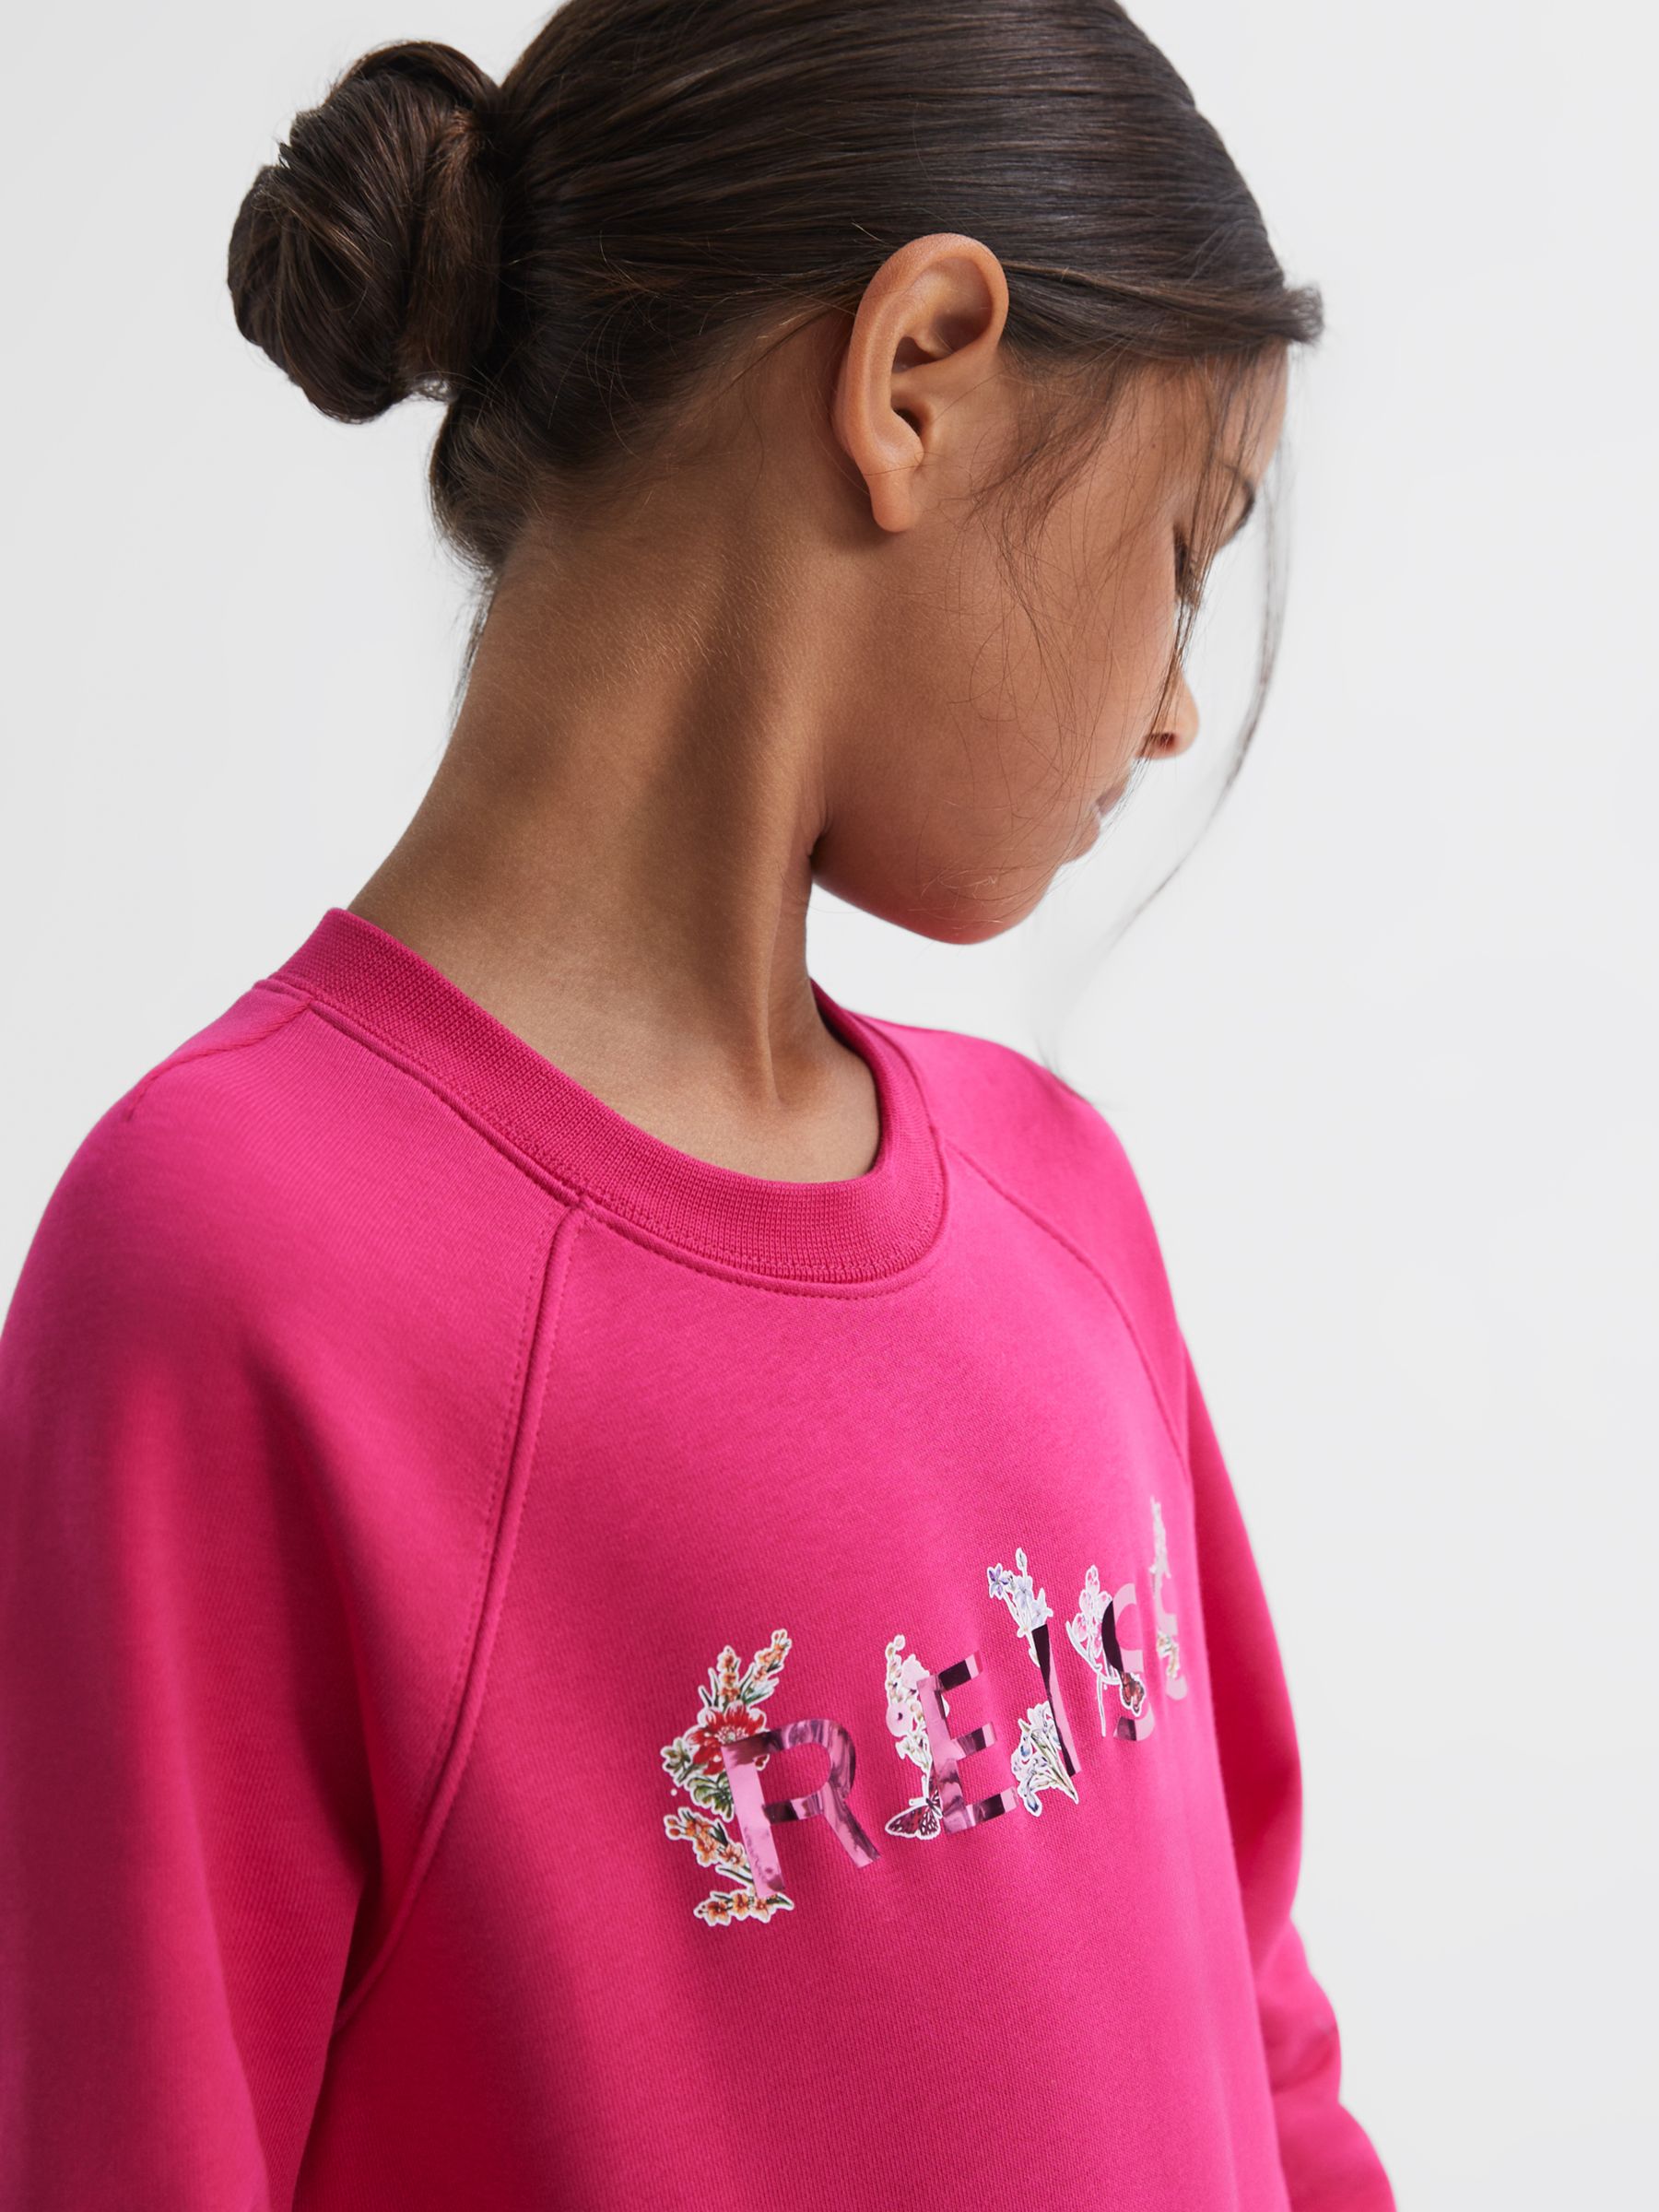 Reiss Kids' Janine Floral Detail Logo Jersey Dress, Pink, 5-6 years